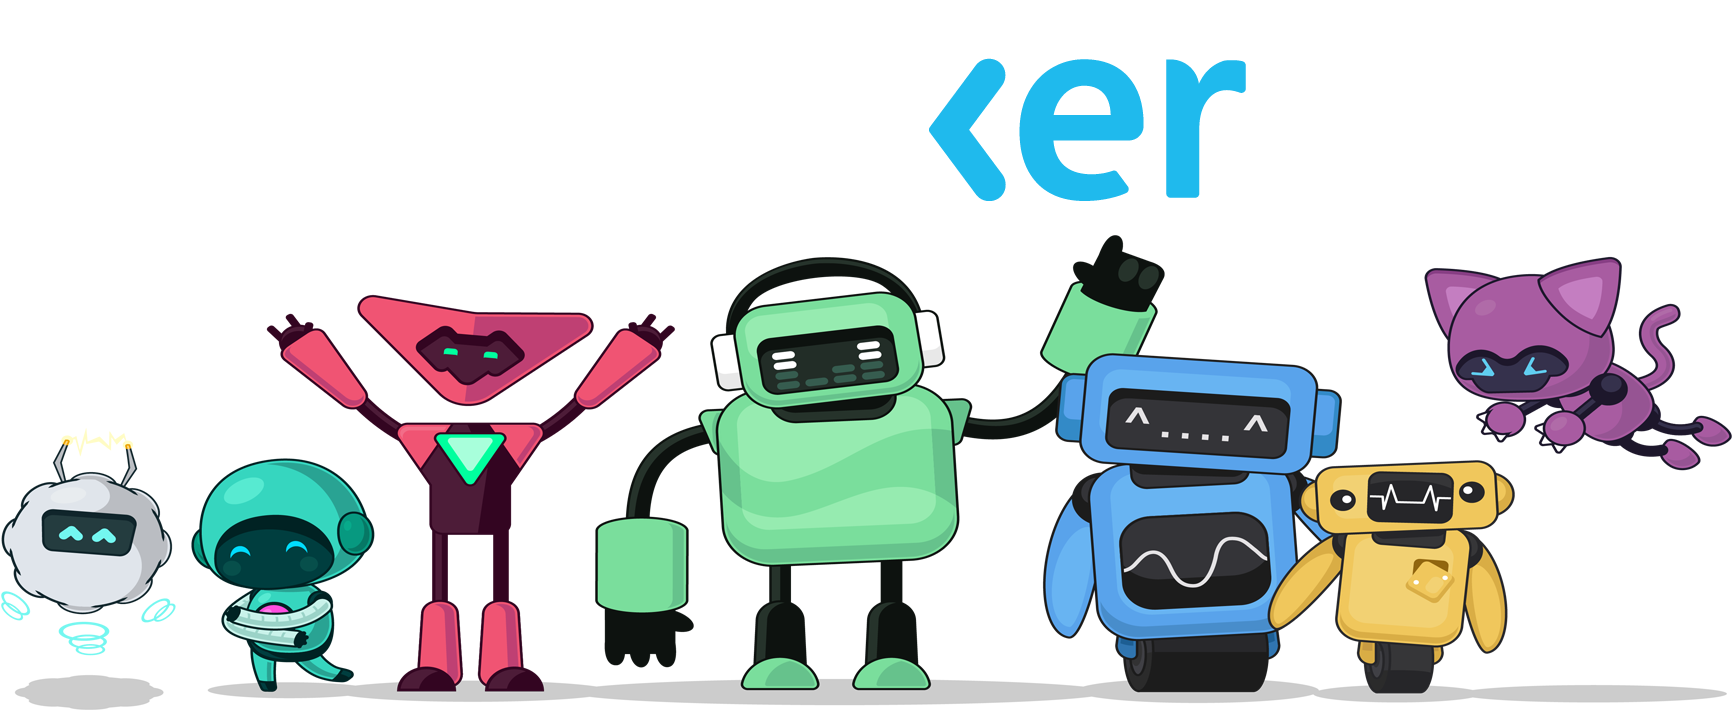 Mixer On Xbox One And Windows - Mixer Bots (1776x781)